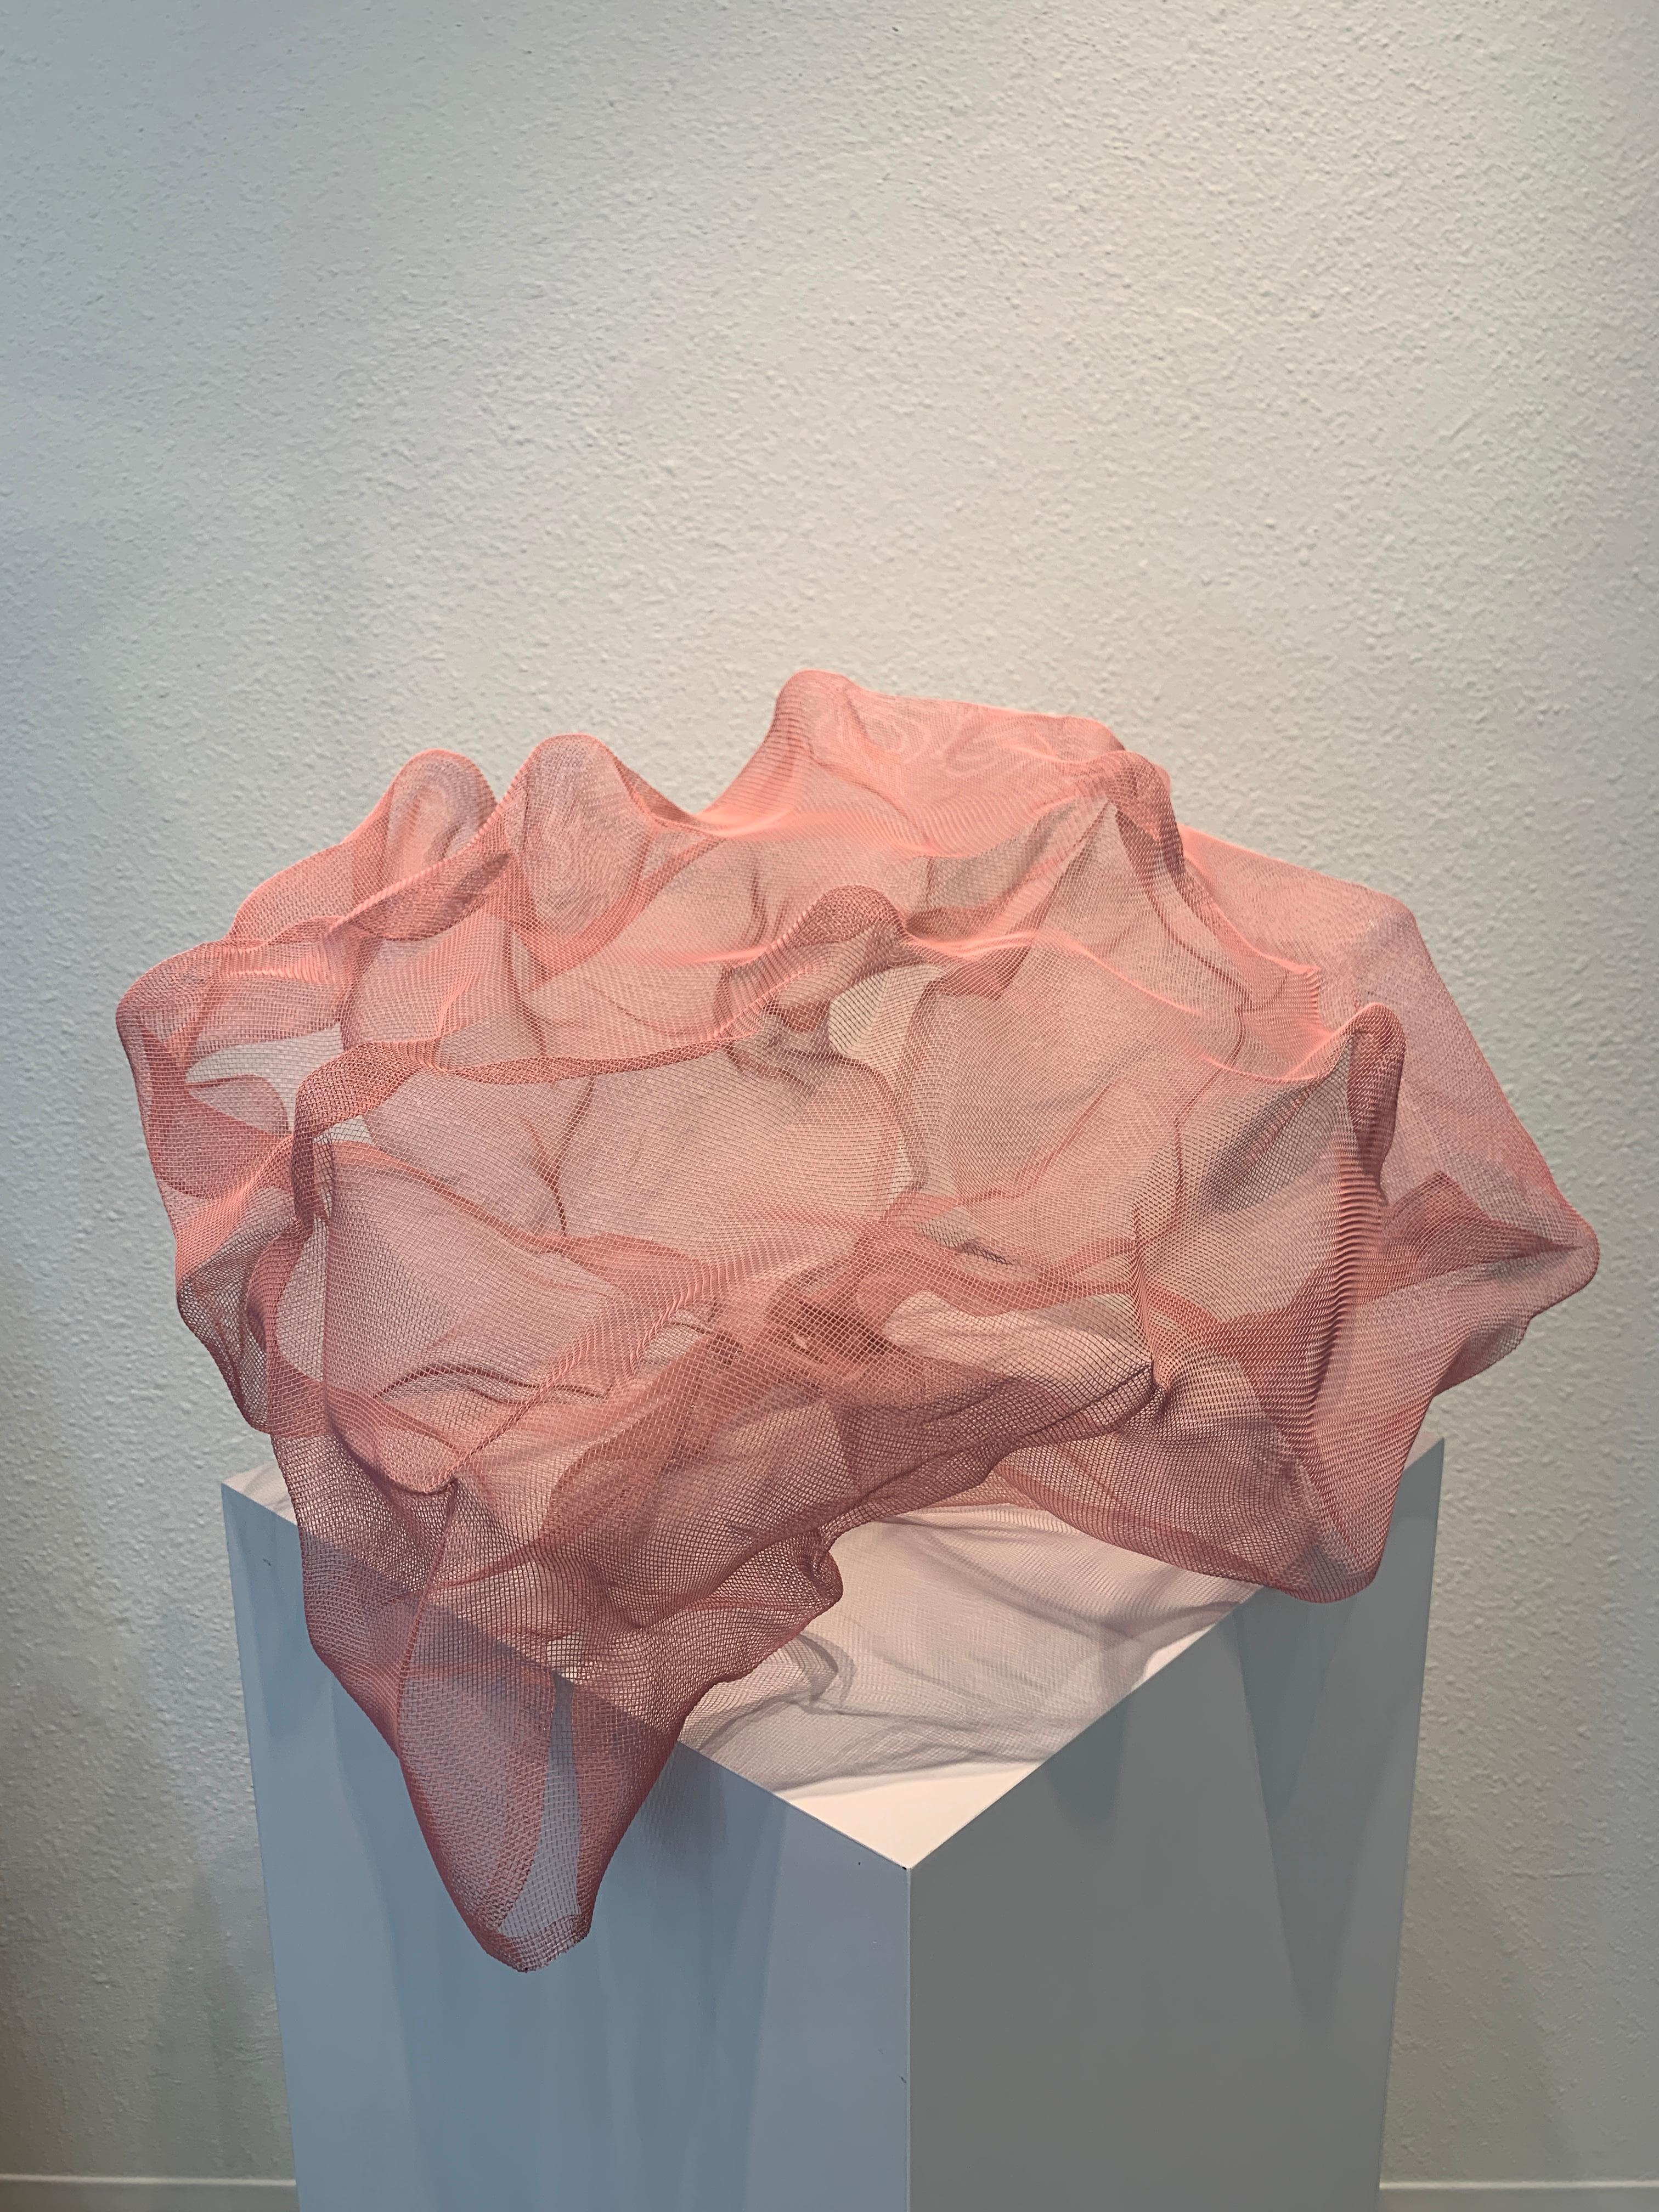 Cotton Candy Cumulus, Atticus Adams Pink Metal Mesh Sculpture Screen 3